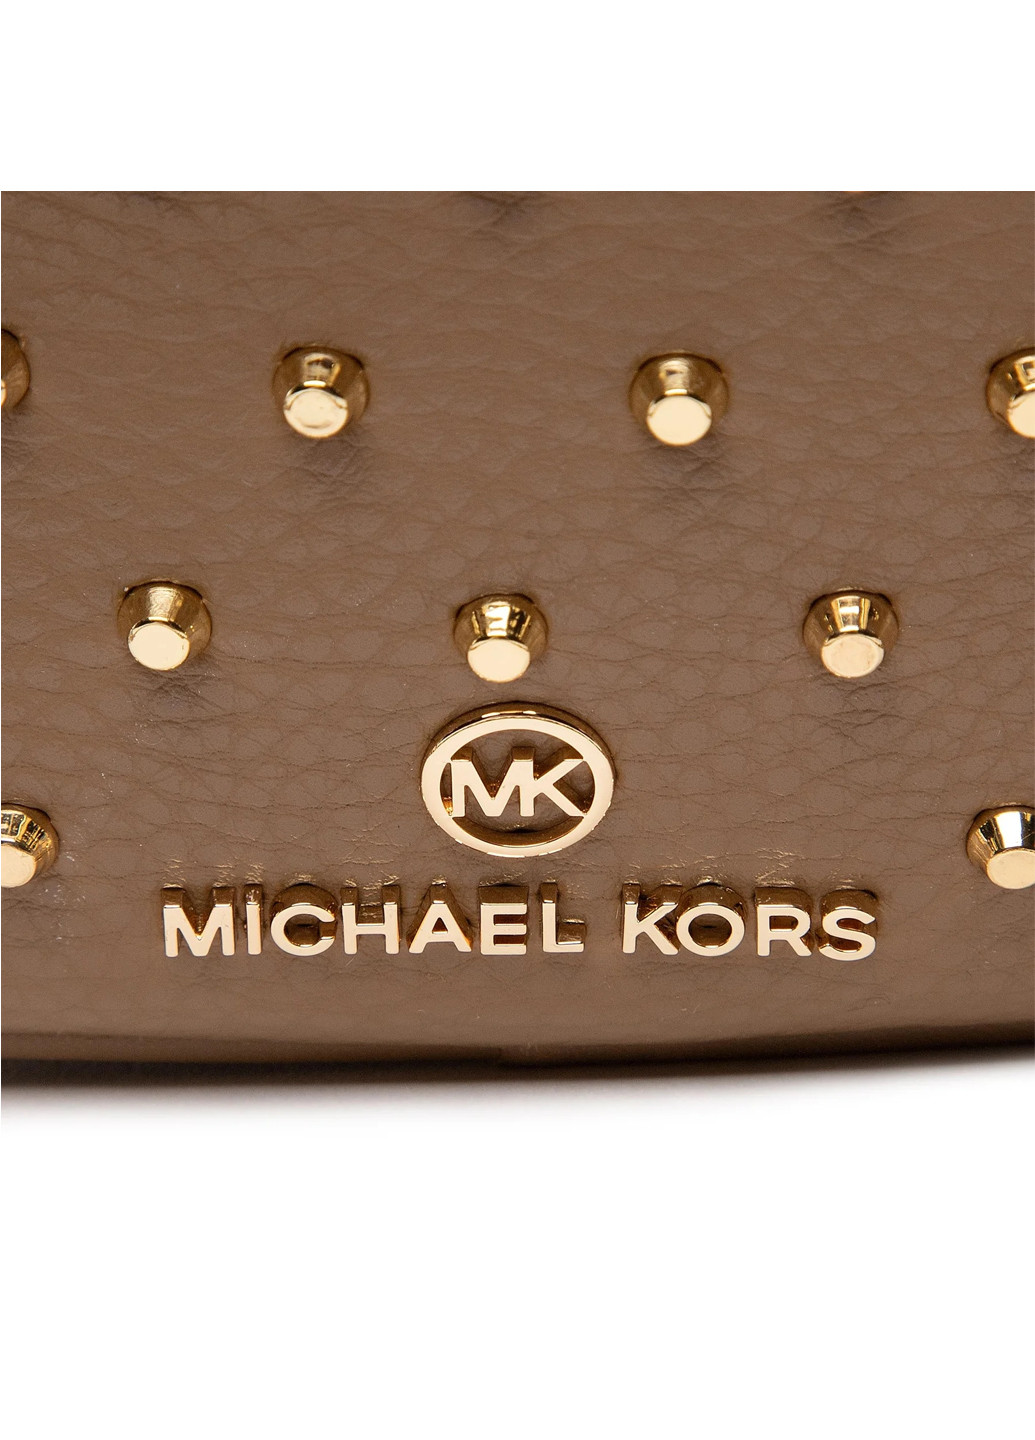 Сумка на пояс женская кожанная Michael Kors xs sling pack msgr (262672661)